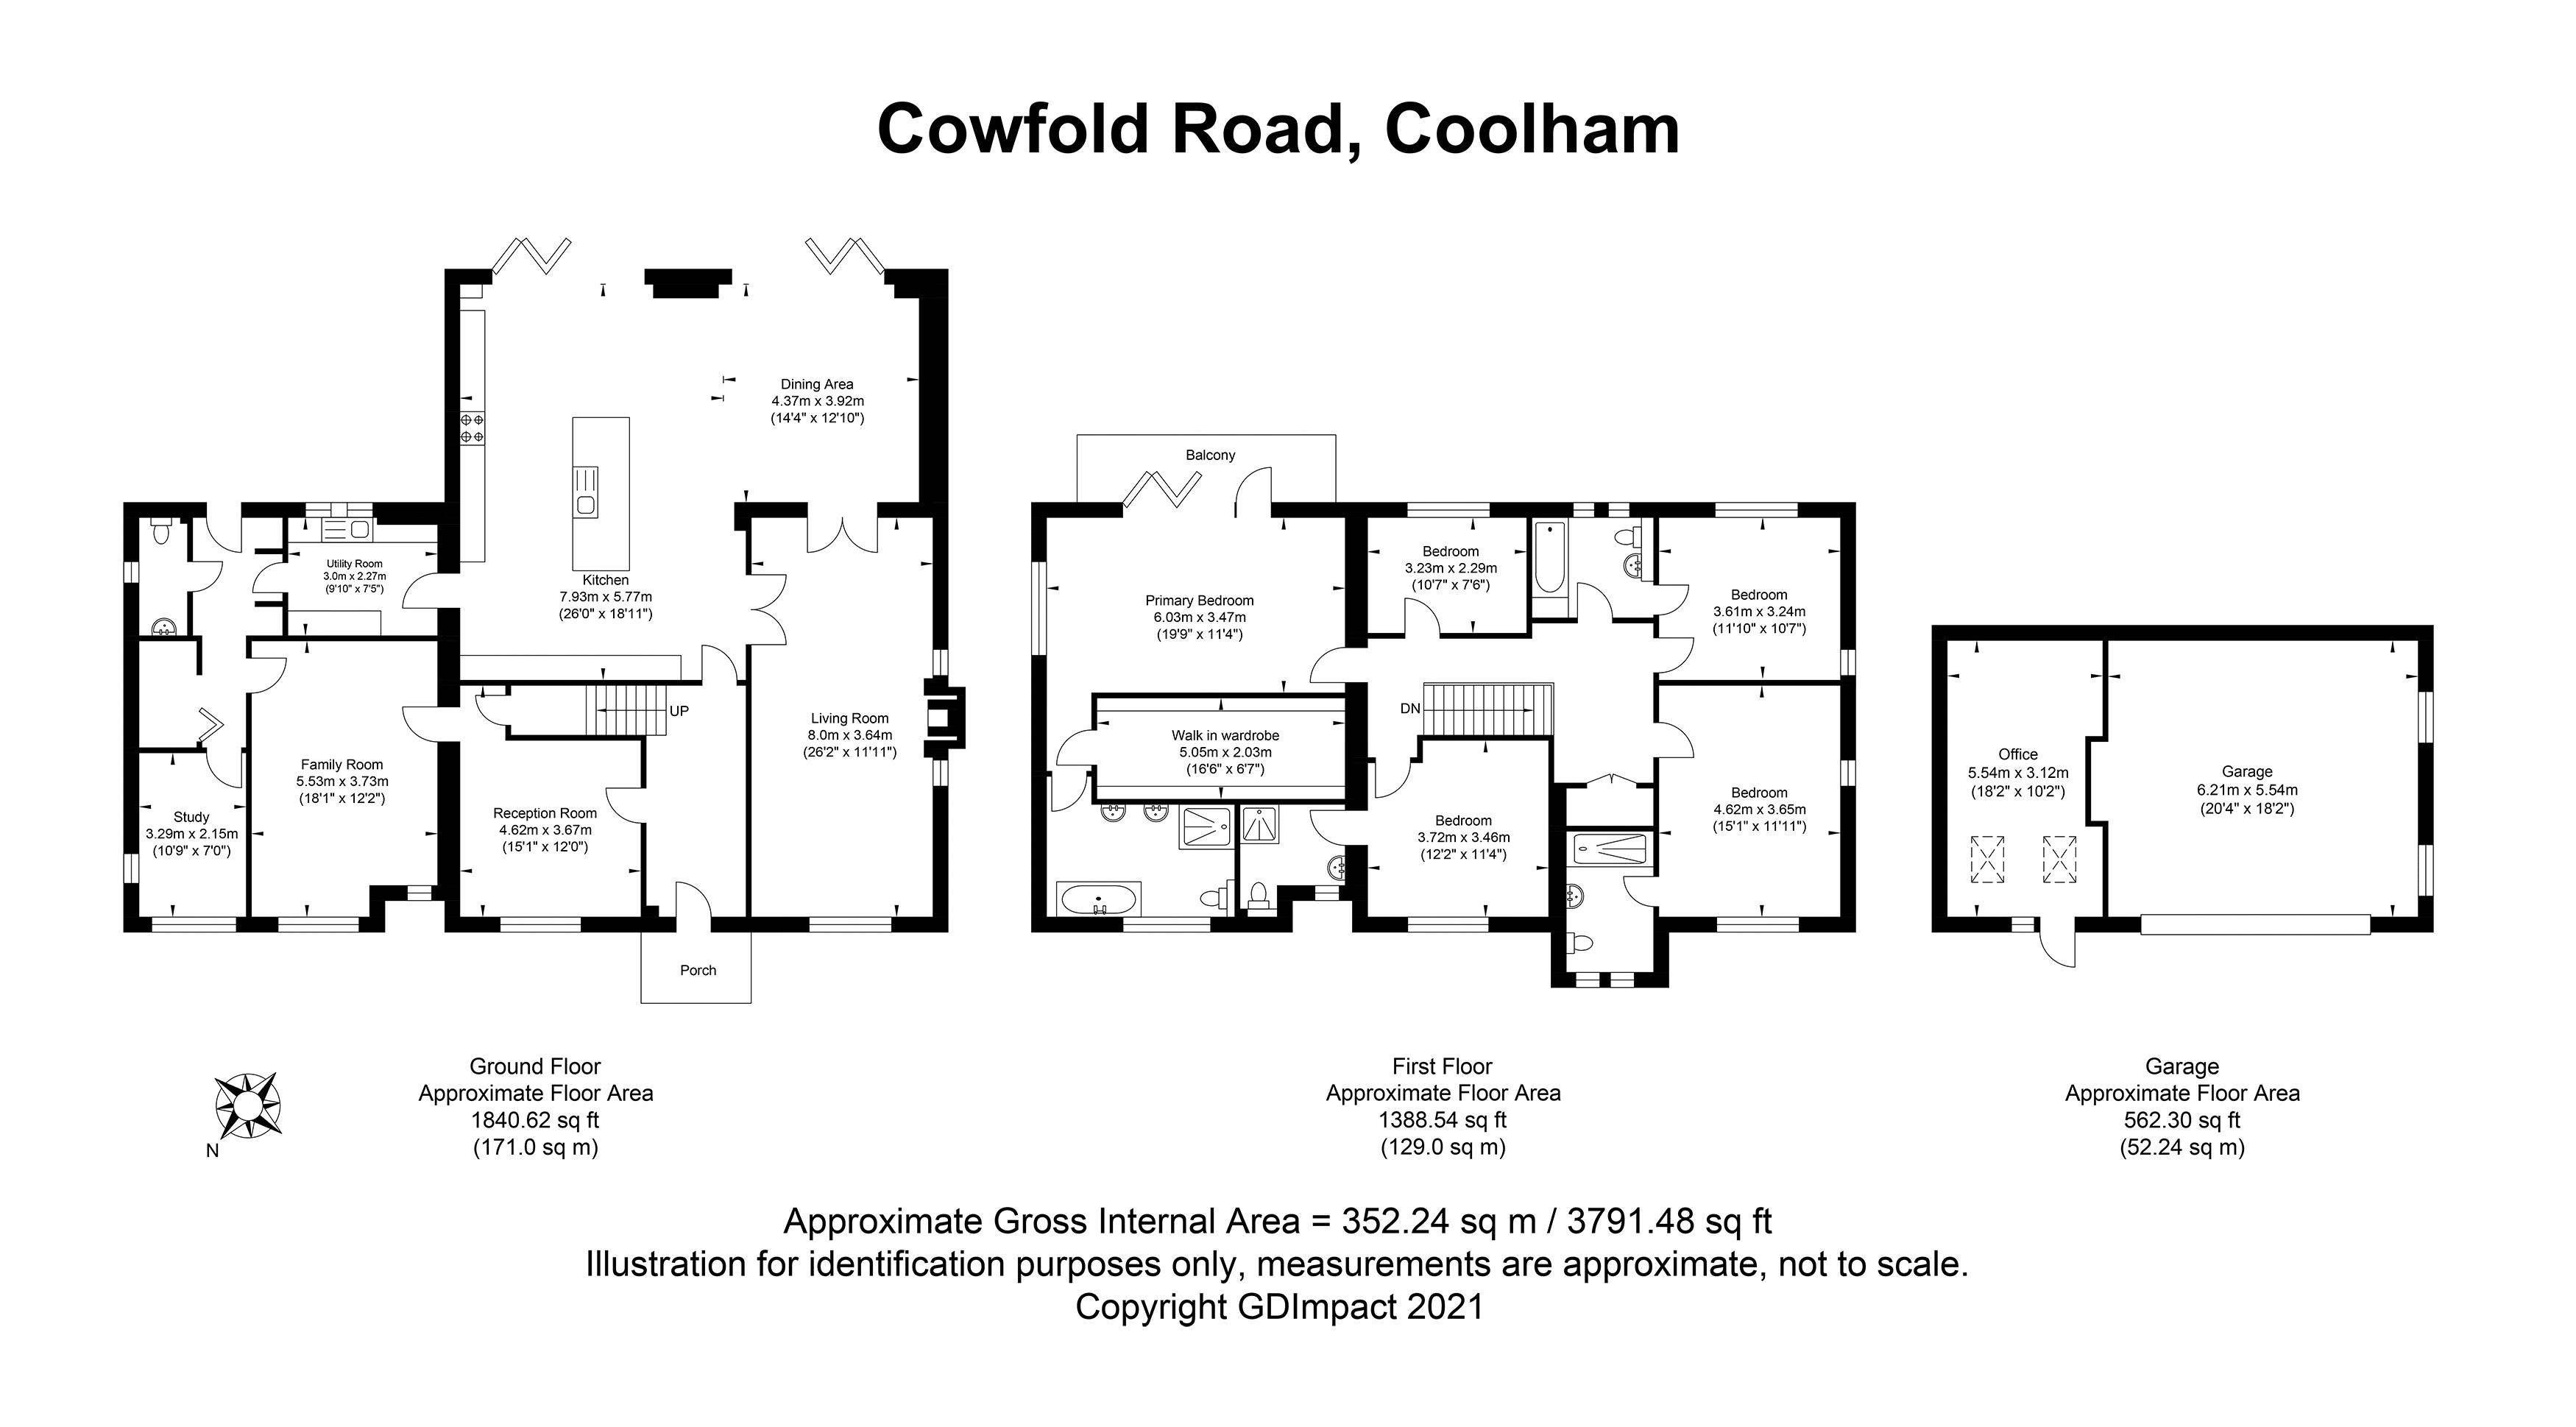 Cowfold Road Coolham